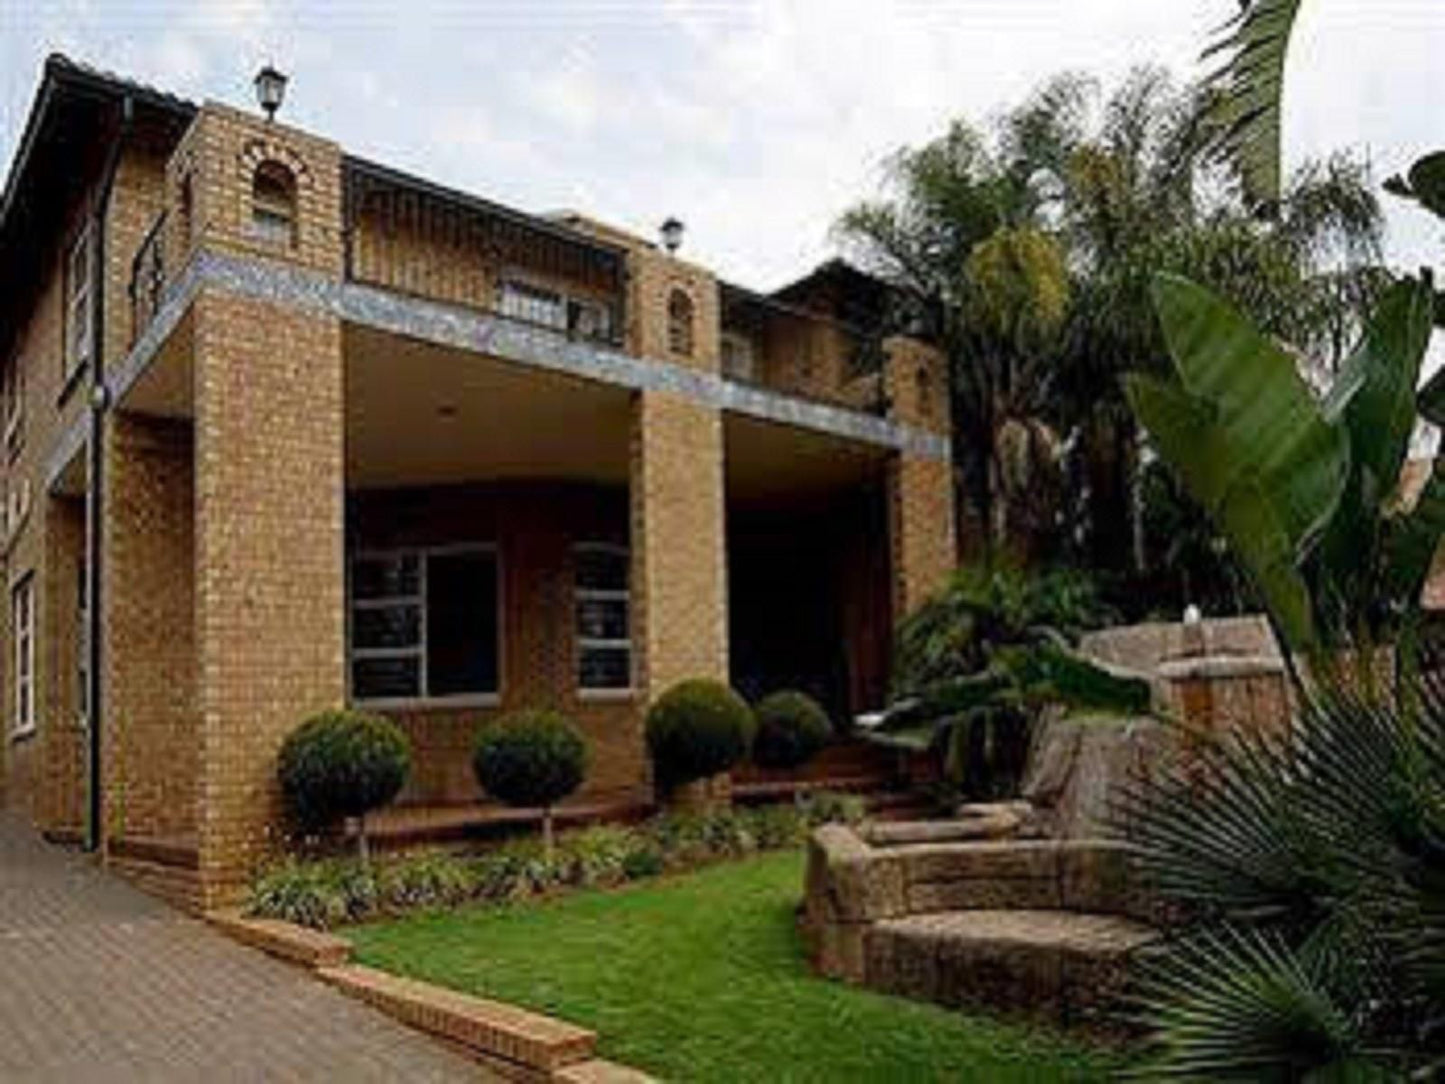 Ithilien S Grace Guest House Akasia Pretoria Tshwane Gauteng South Africa House, Building, Architecture